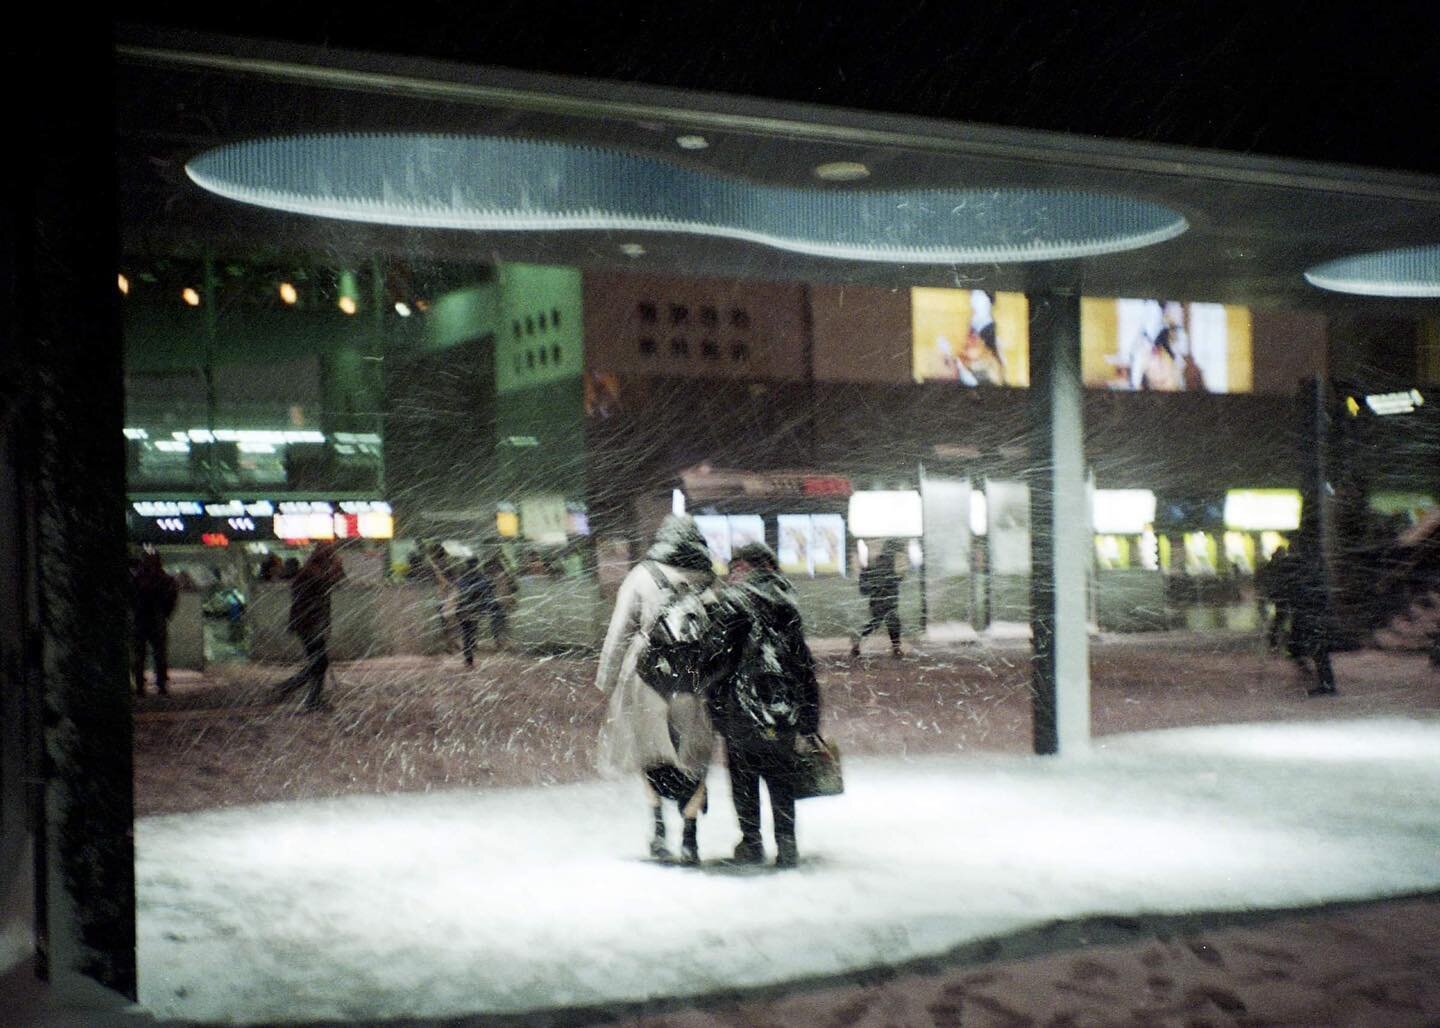 Snow storm,
Kyoto Station this time last year. ❄️ 
.
.
.

#filmfridgemag #filmleaders #thefilmstead #filmwave #restorefrombackup #seasonedfilm #kodakfilm #filmphotogram #aboxofgrain #thedaily35mm #shootfilmmag #hotspotmag #magazine35mm #filmallover #